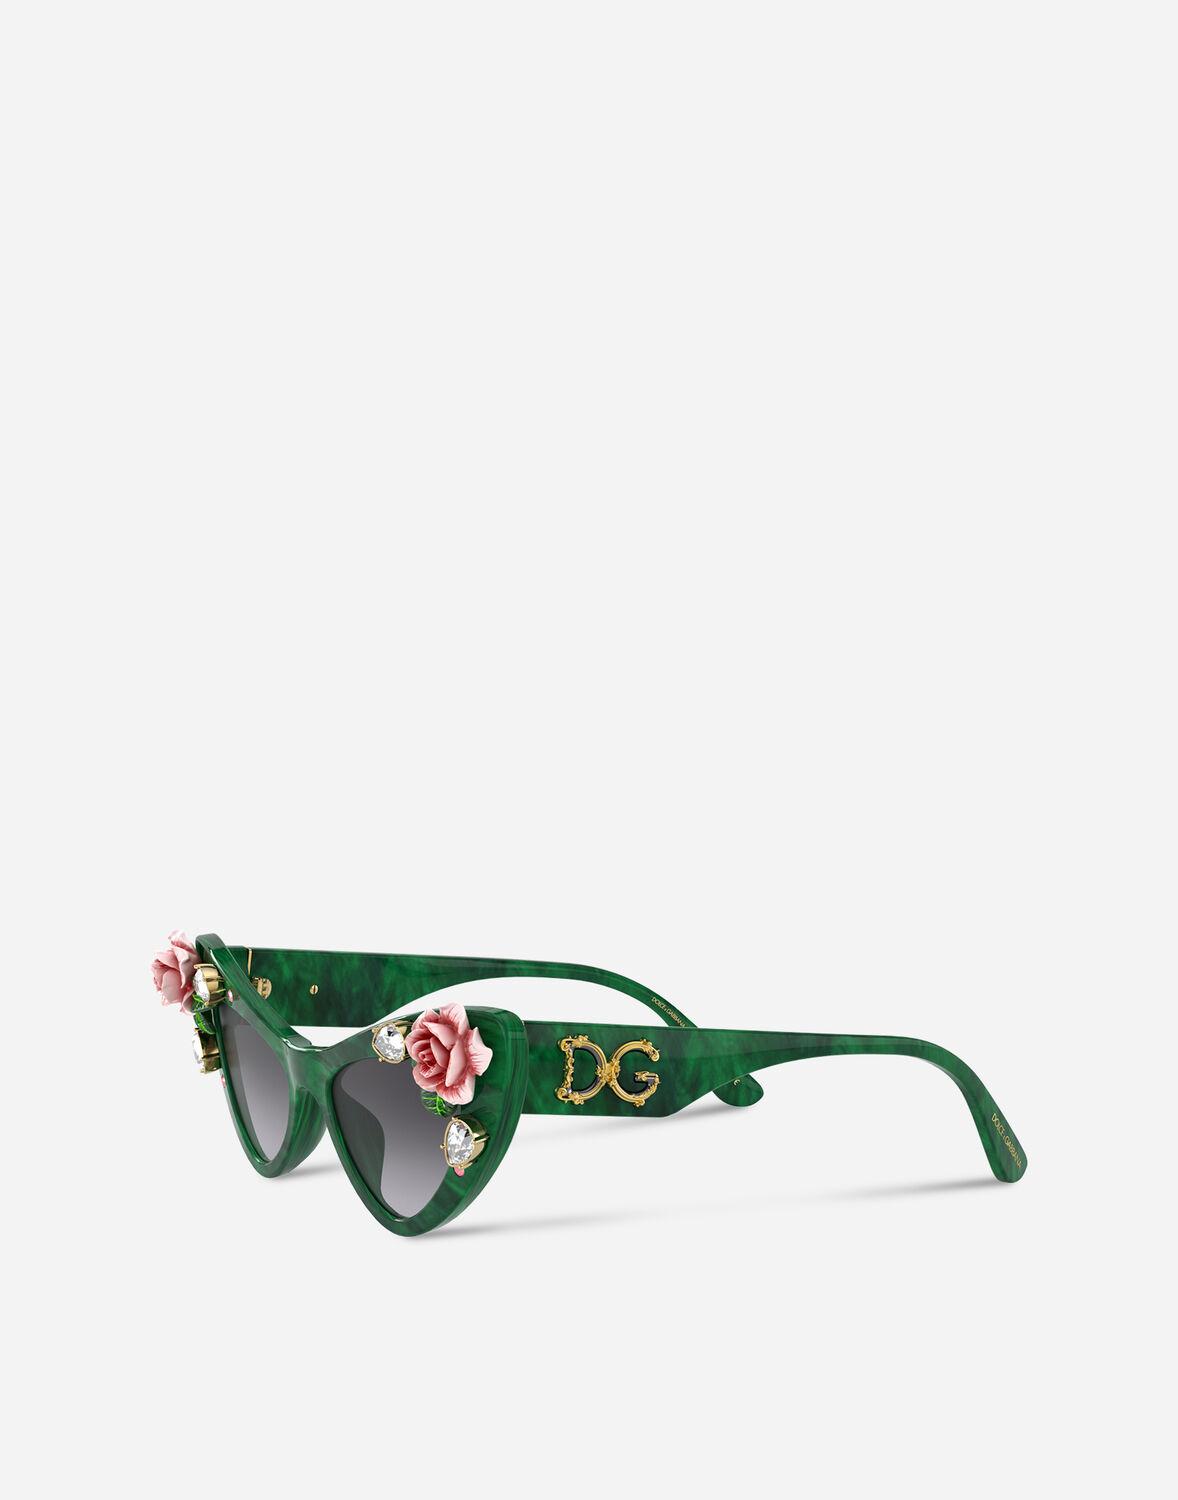 dolce gabbana rose sunglasses